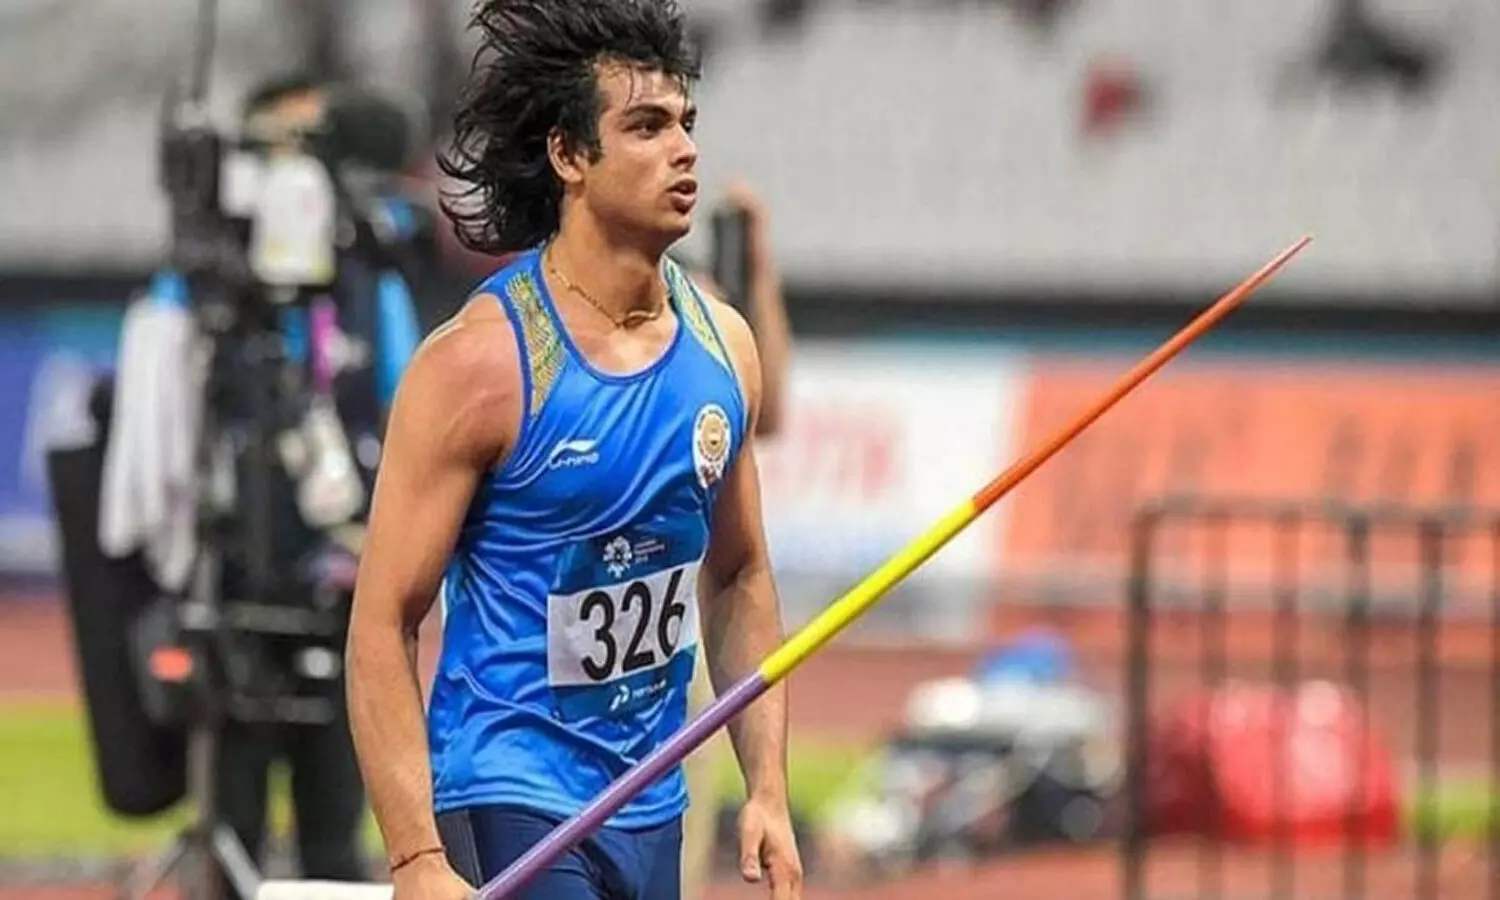 Tokyo Olympics 2020: Neeraj Chopra wins a historic gold medal in mens javelin throw event